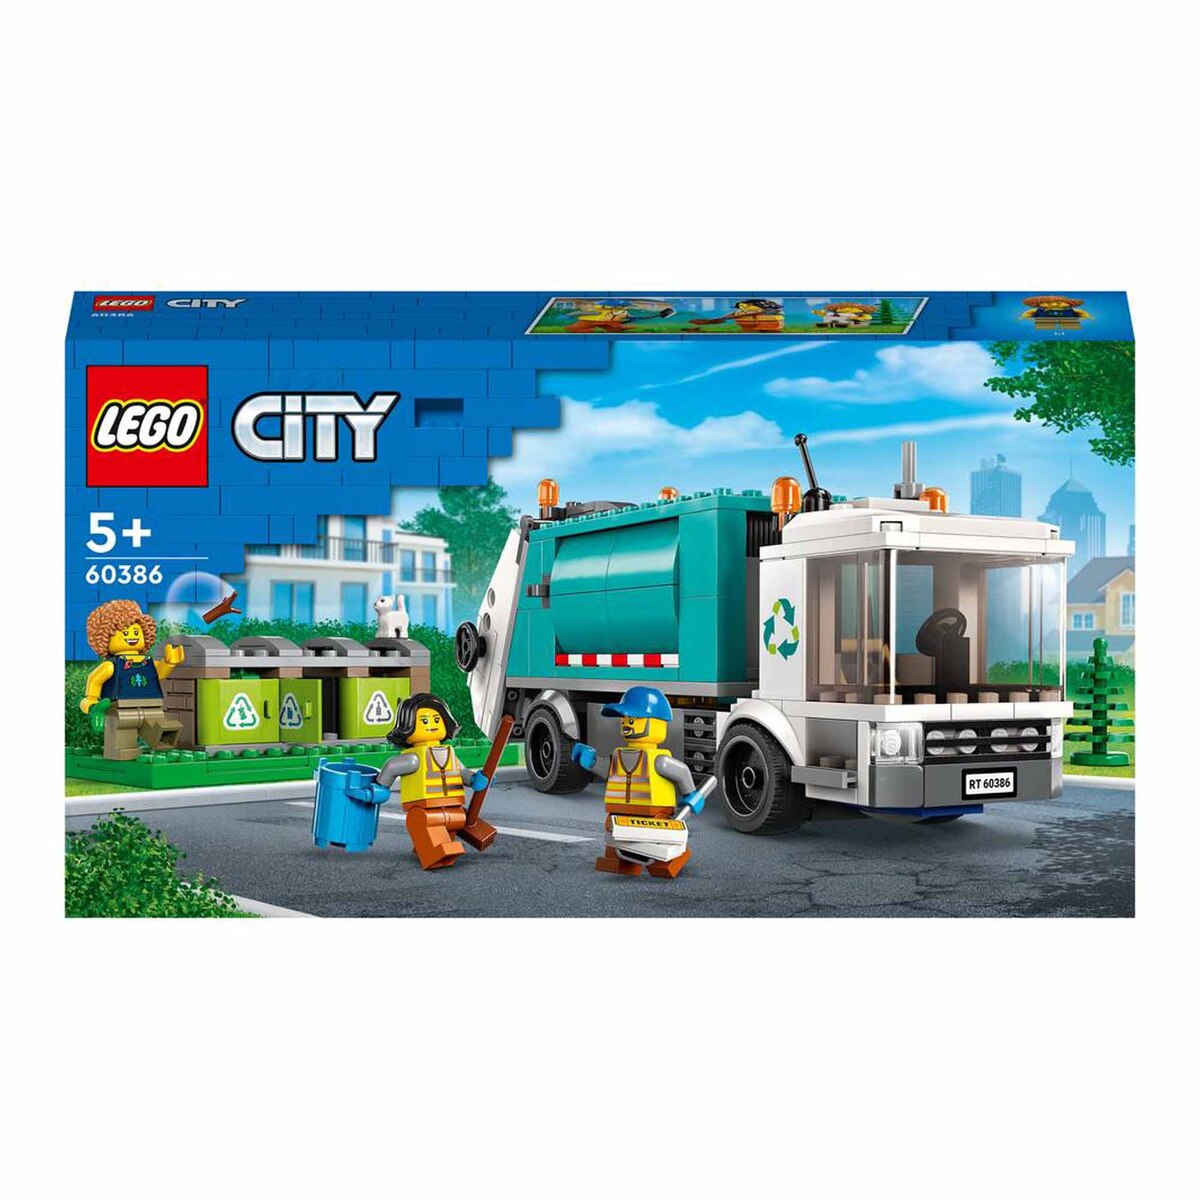 Lego City Garbage Truck Playset, 6425859